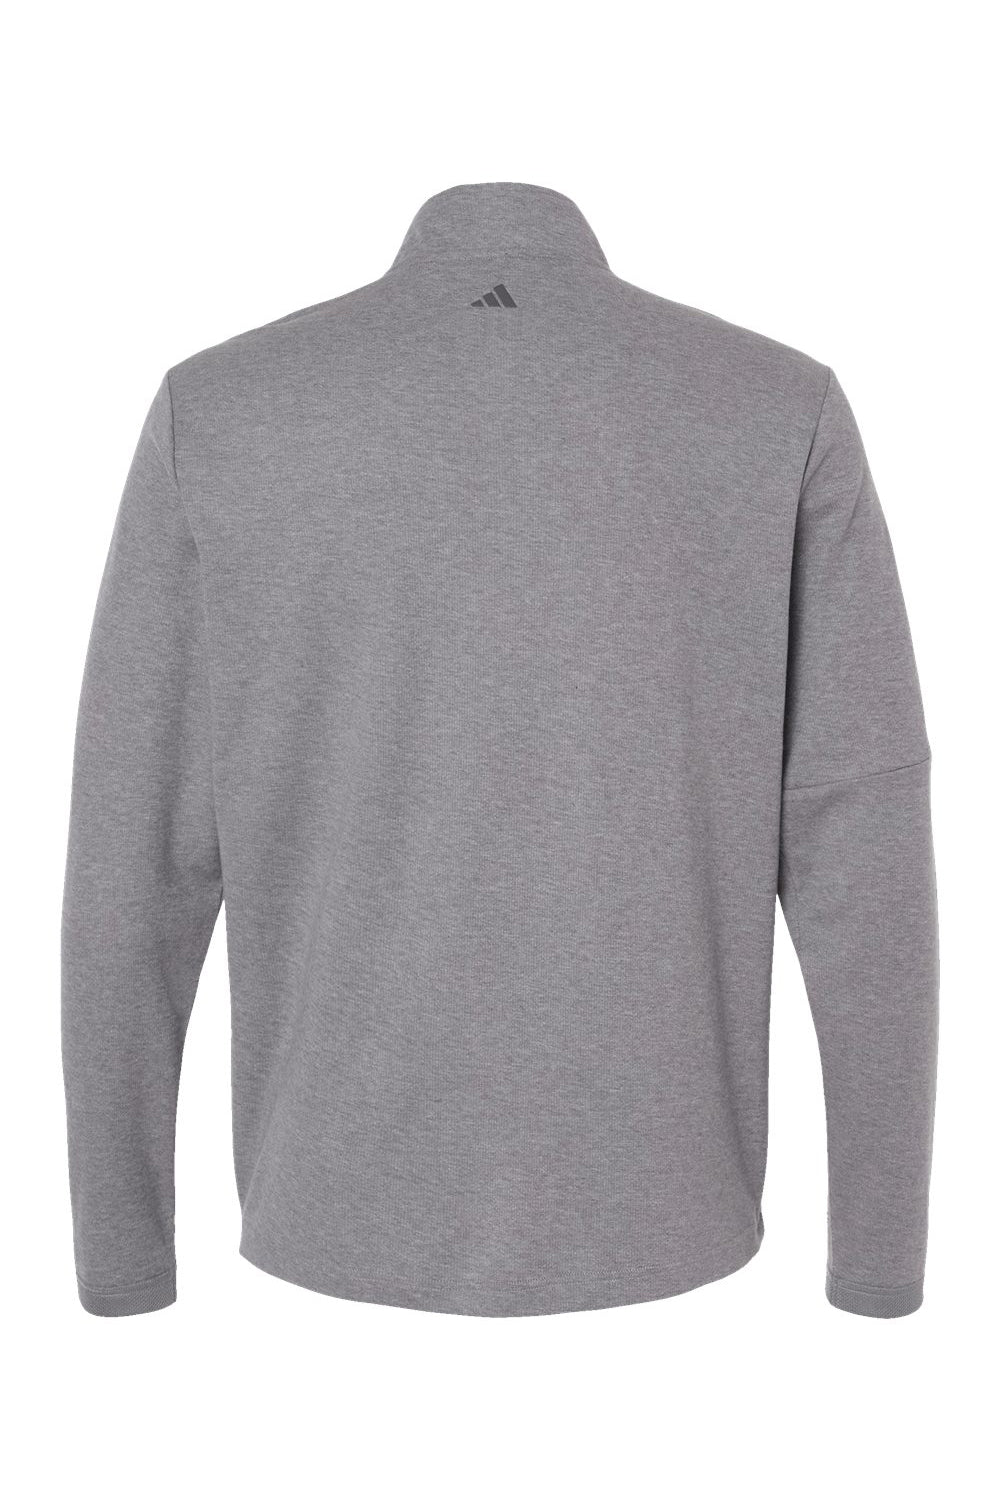 Adidas A554 Mens 3 Stripes 1/4 Zip Sweater Grey Melange Flat Back